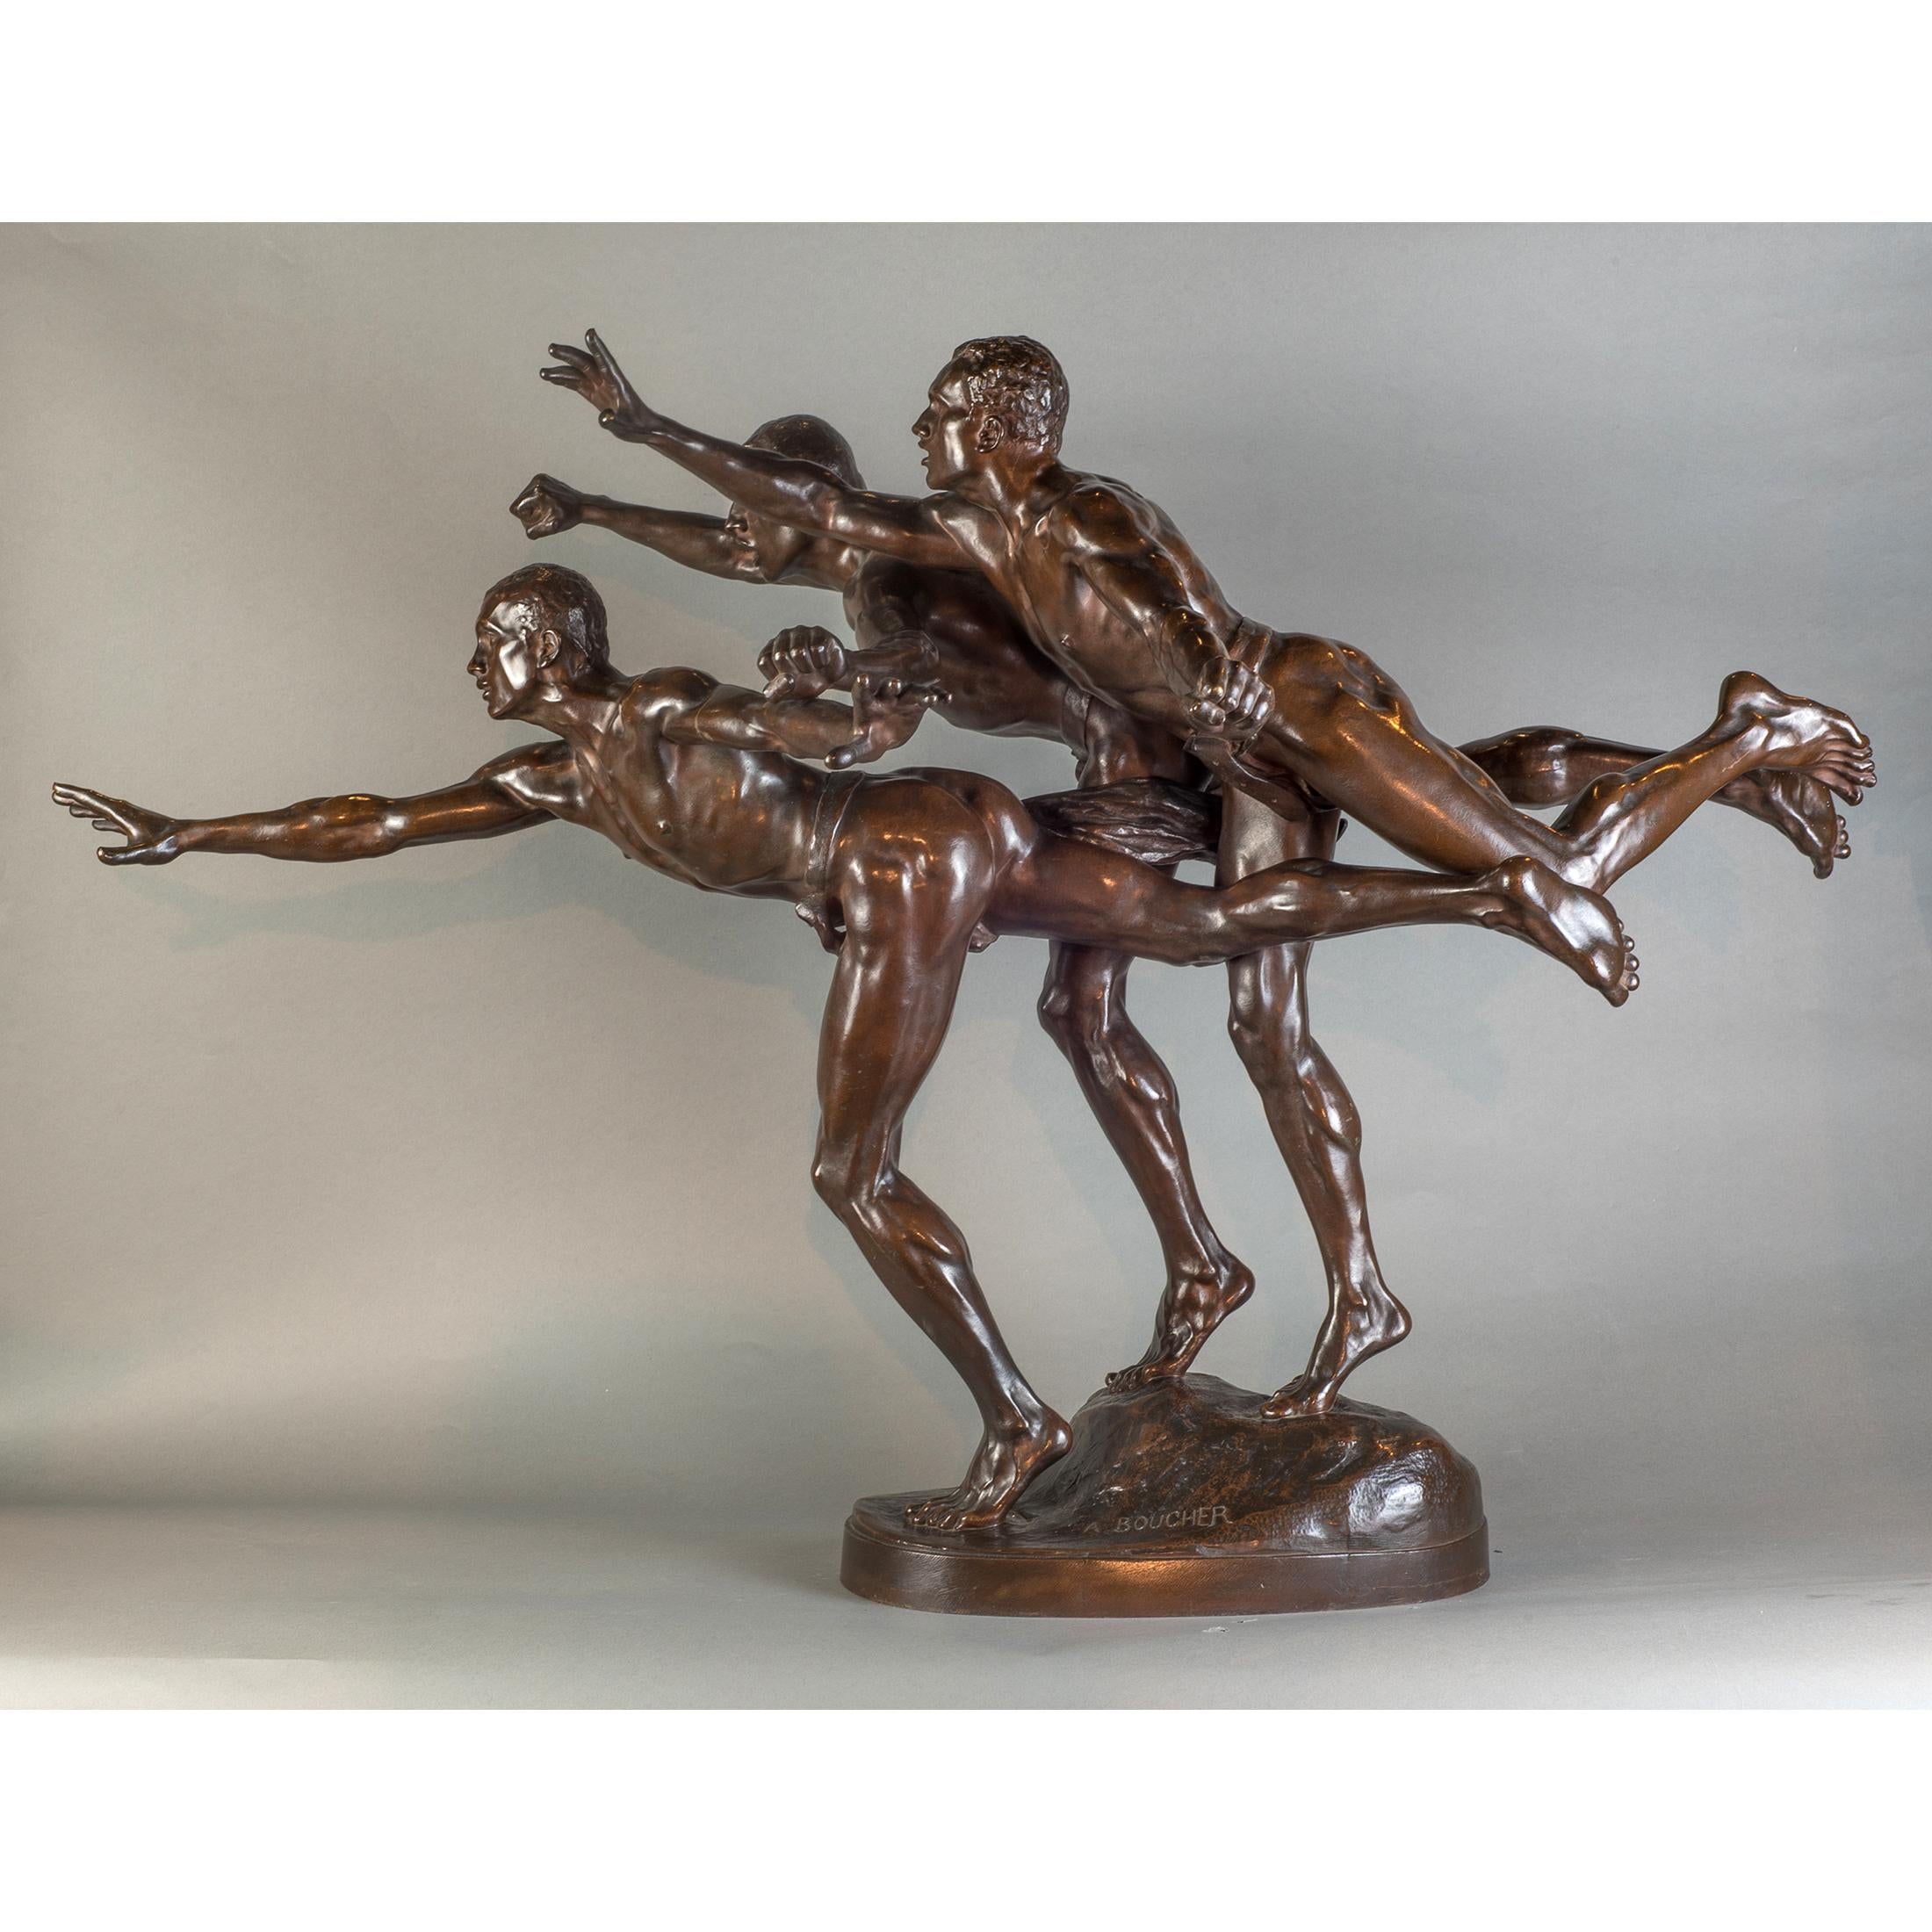 A fine patinated bronze figural group sculpture entitled 